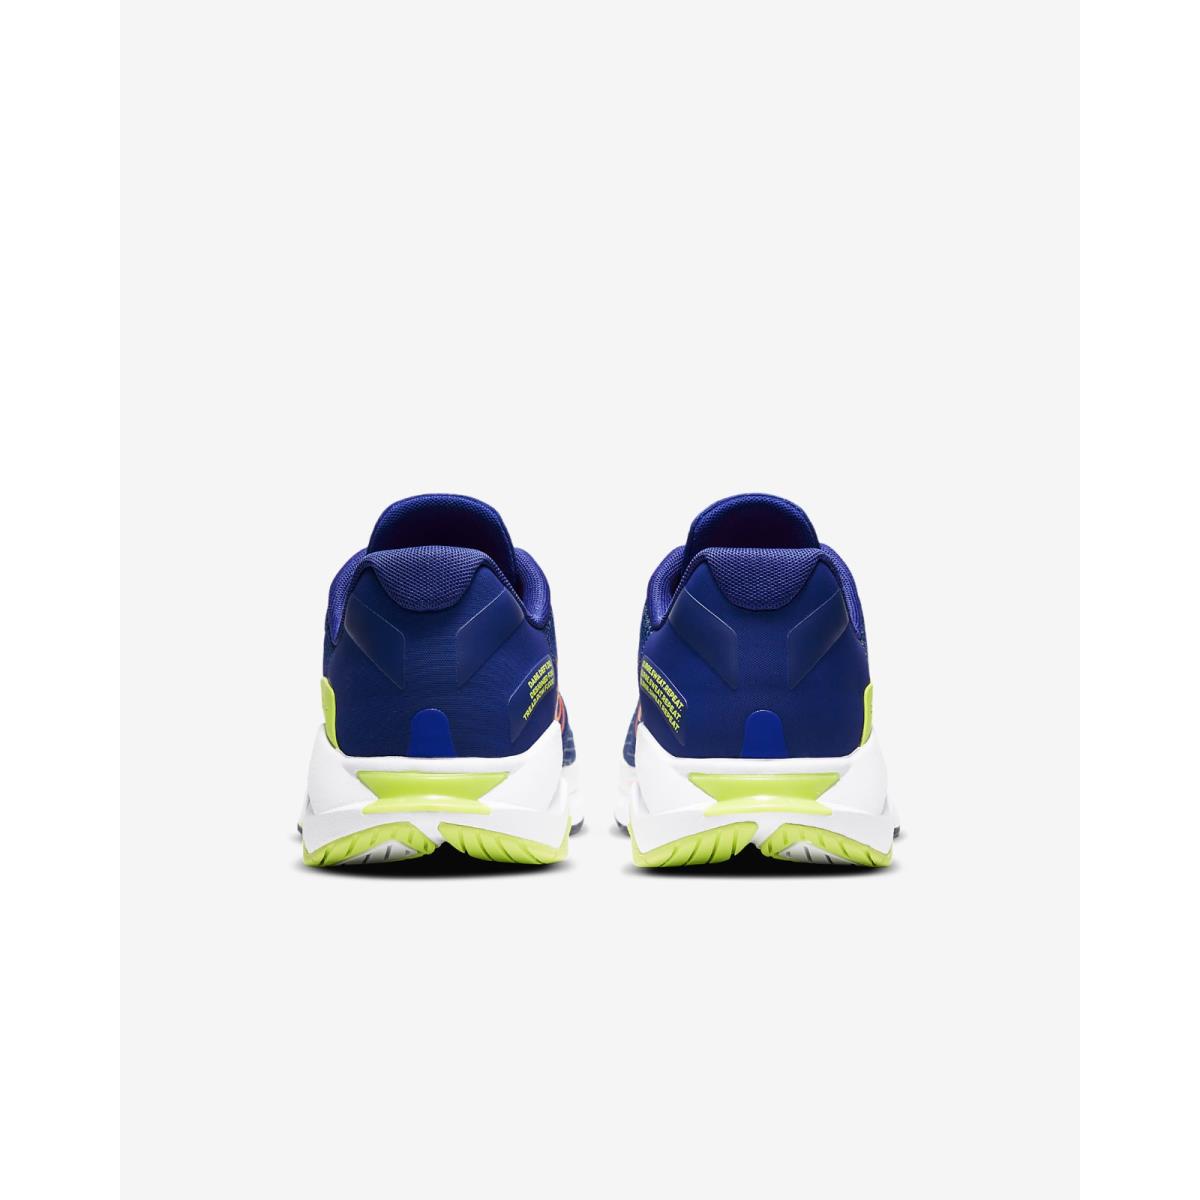 Nike shoes ZoomX SuperRep Surge - Deep Royal Blue/Cyber/Bright Mango/White 6